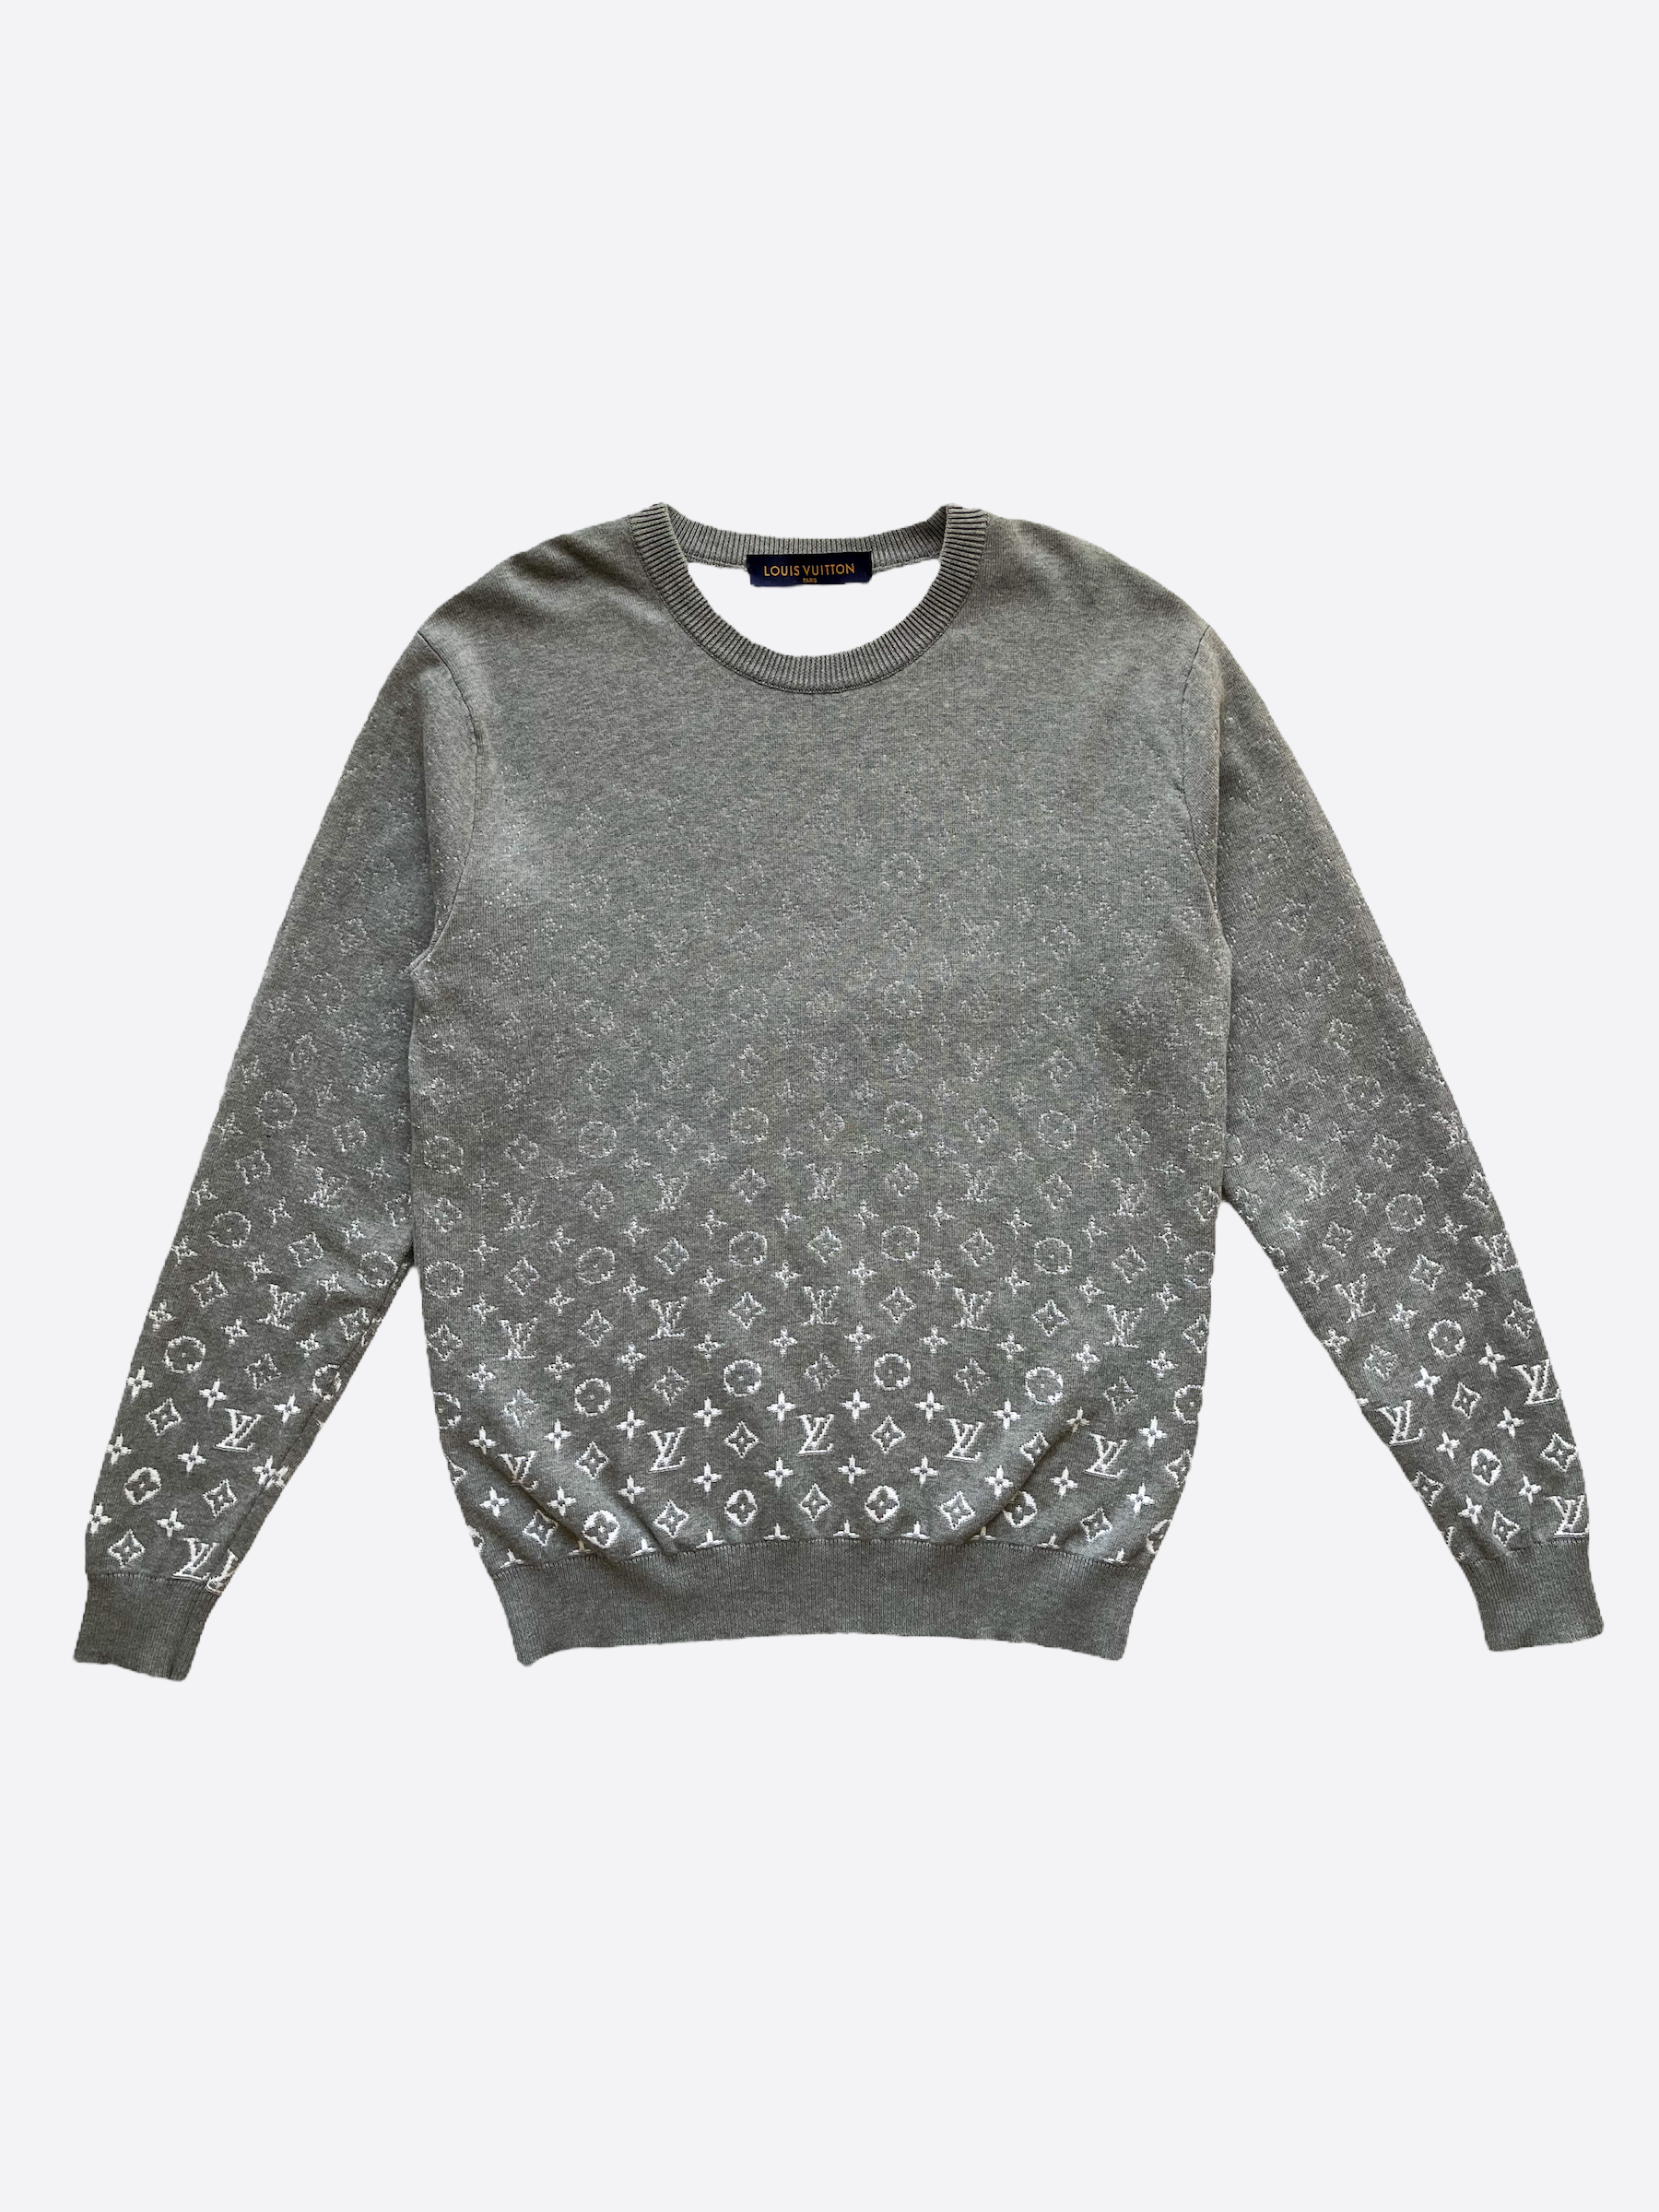 Chewy Vuitton Retro Monogram Sweater